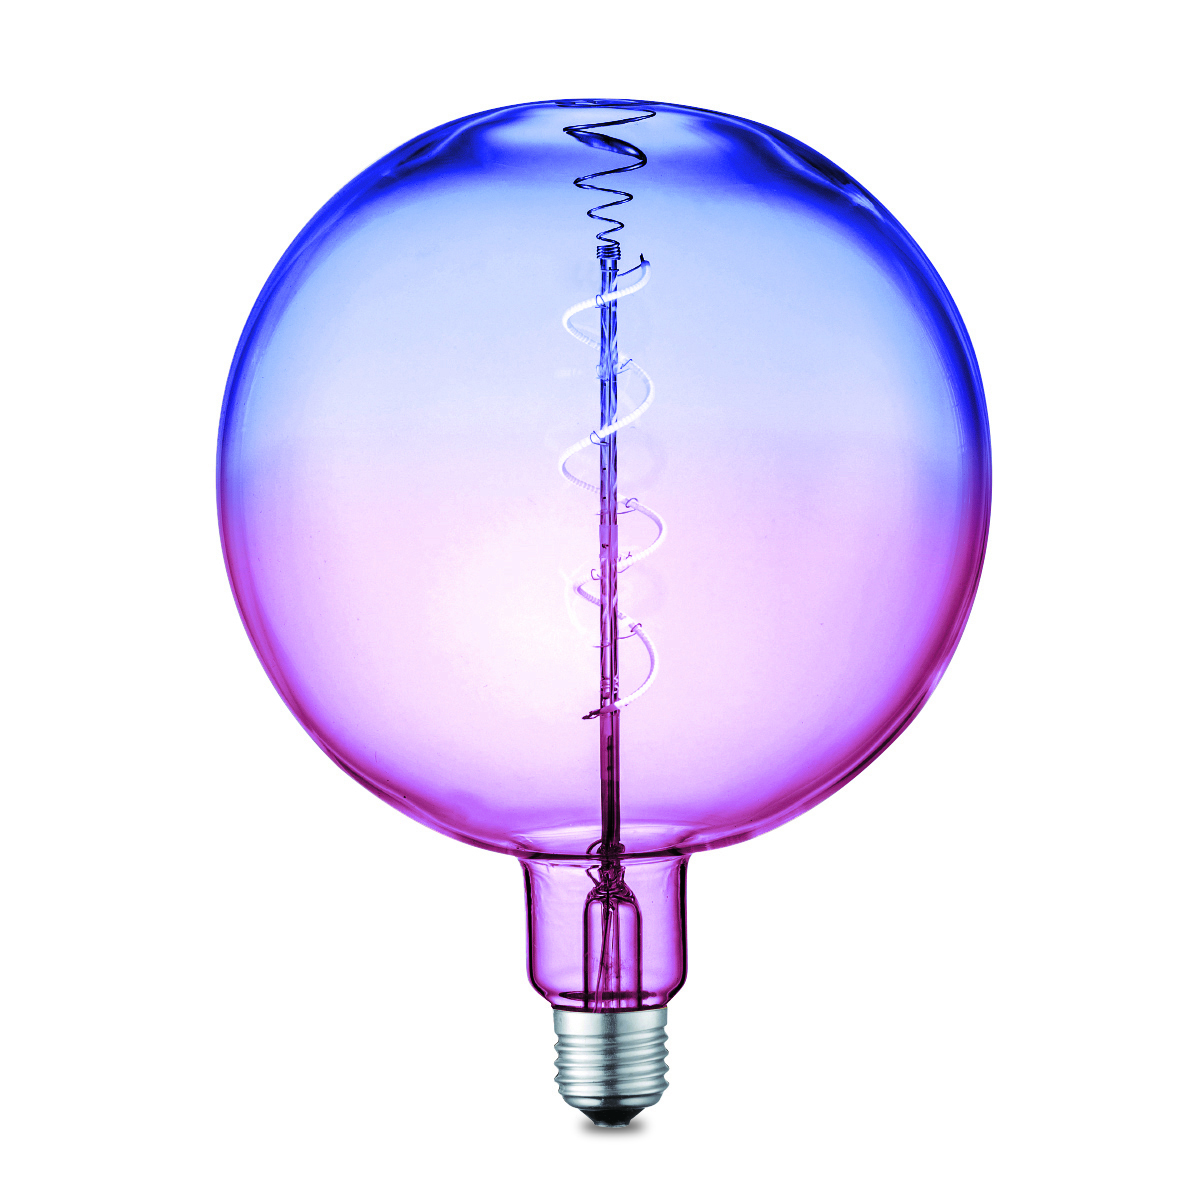 Tangla lighting - TLB-9007-04C - LED Light Bulb Single Spiral filament - G180 4W gradient color bulb - blue - non dimmable - E27